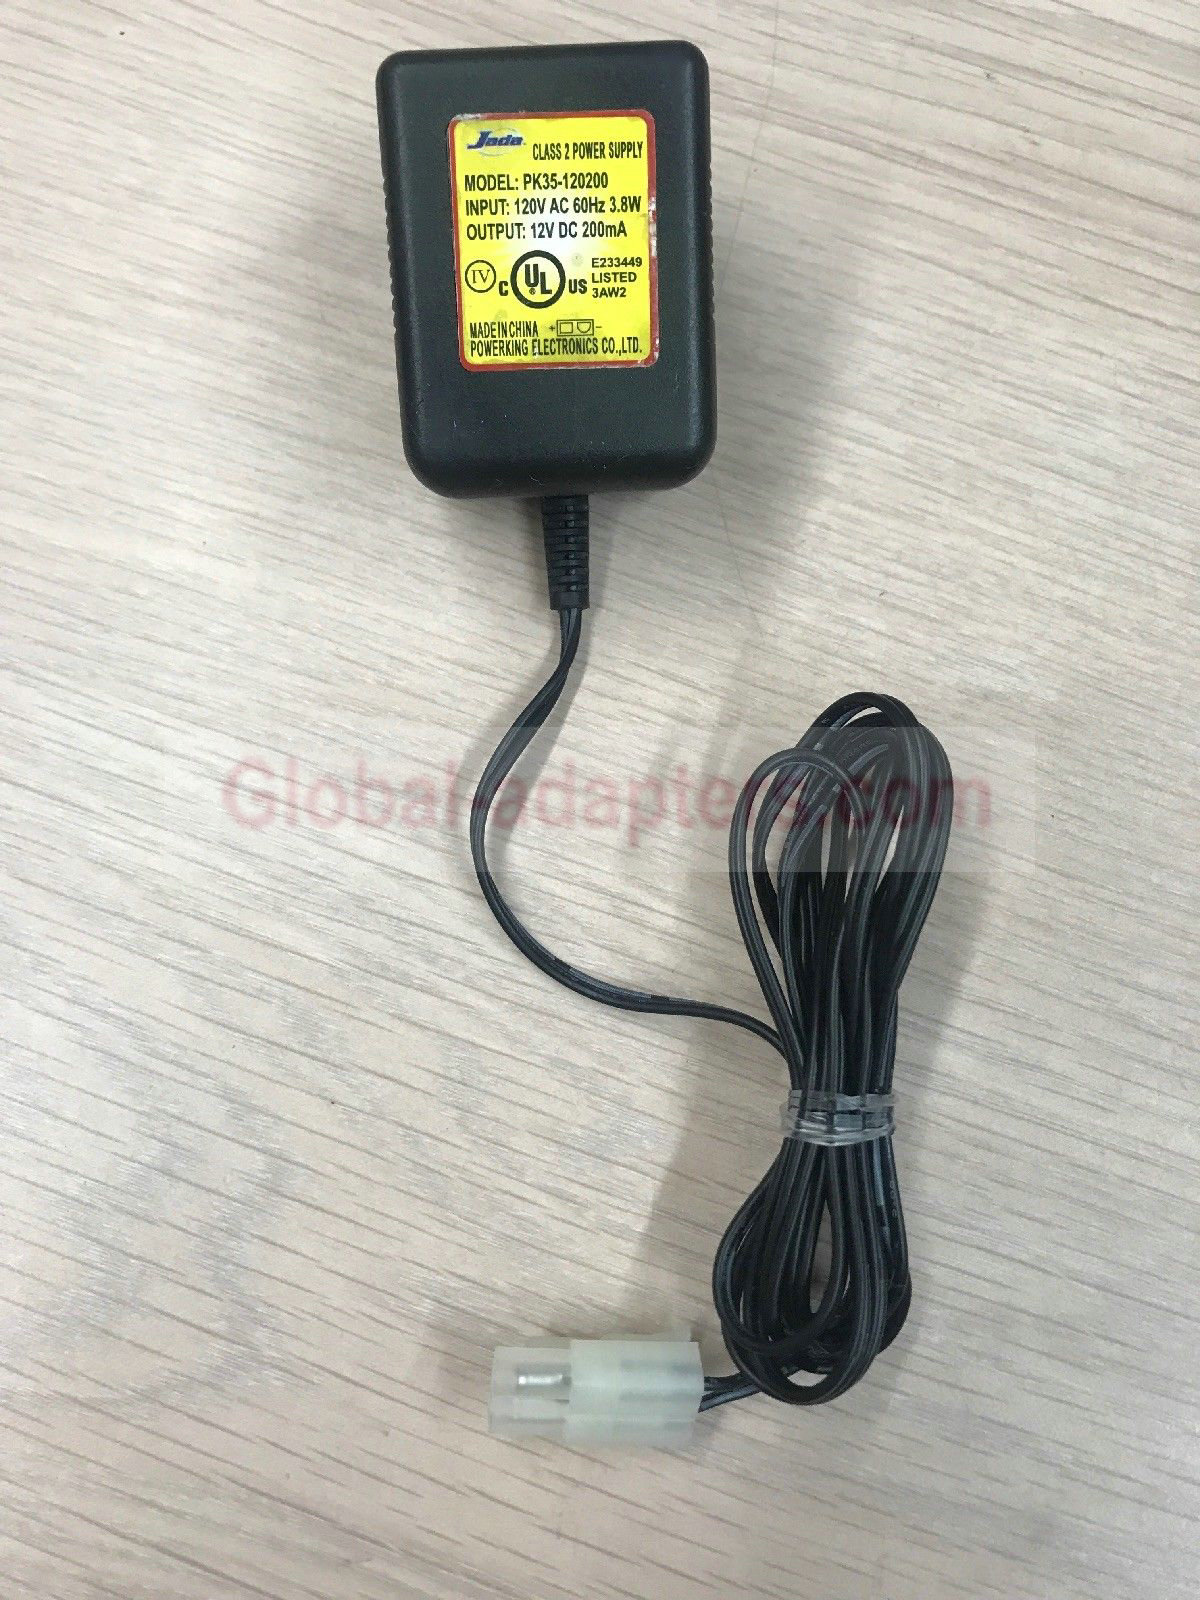 NEW 12V 200mA Jade PK35-120200 AC Power Supply Adapter - Click Image to Close